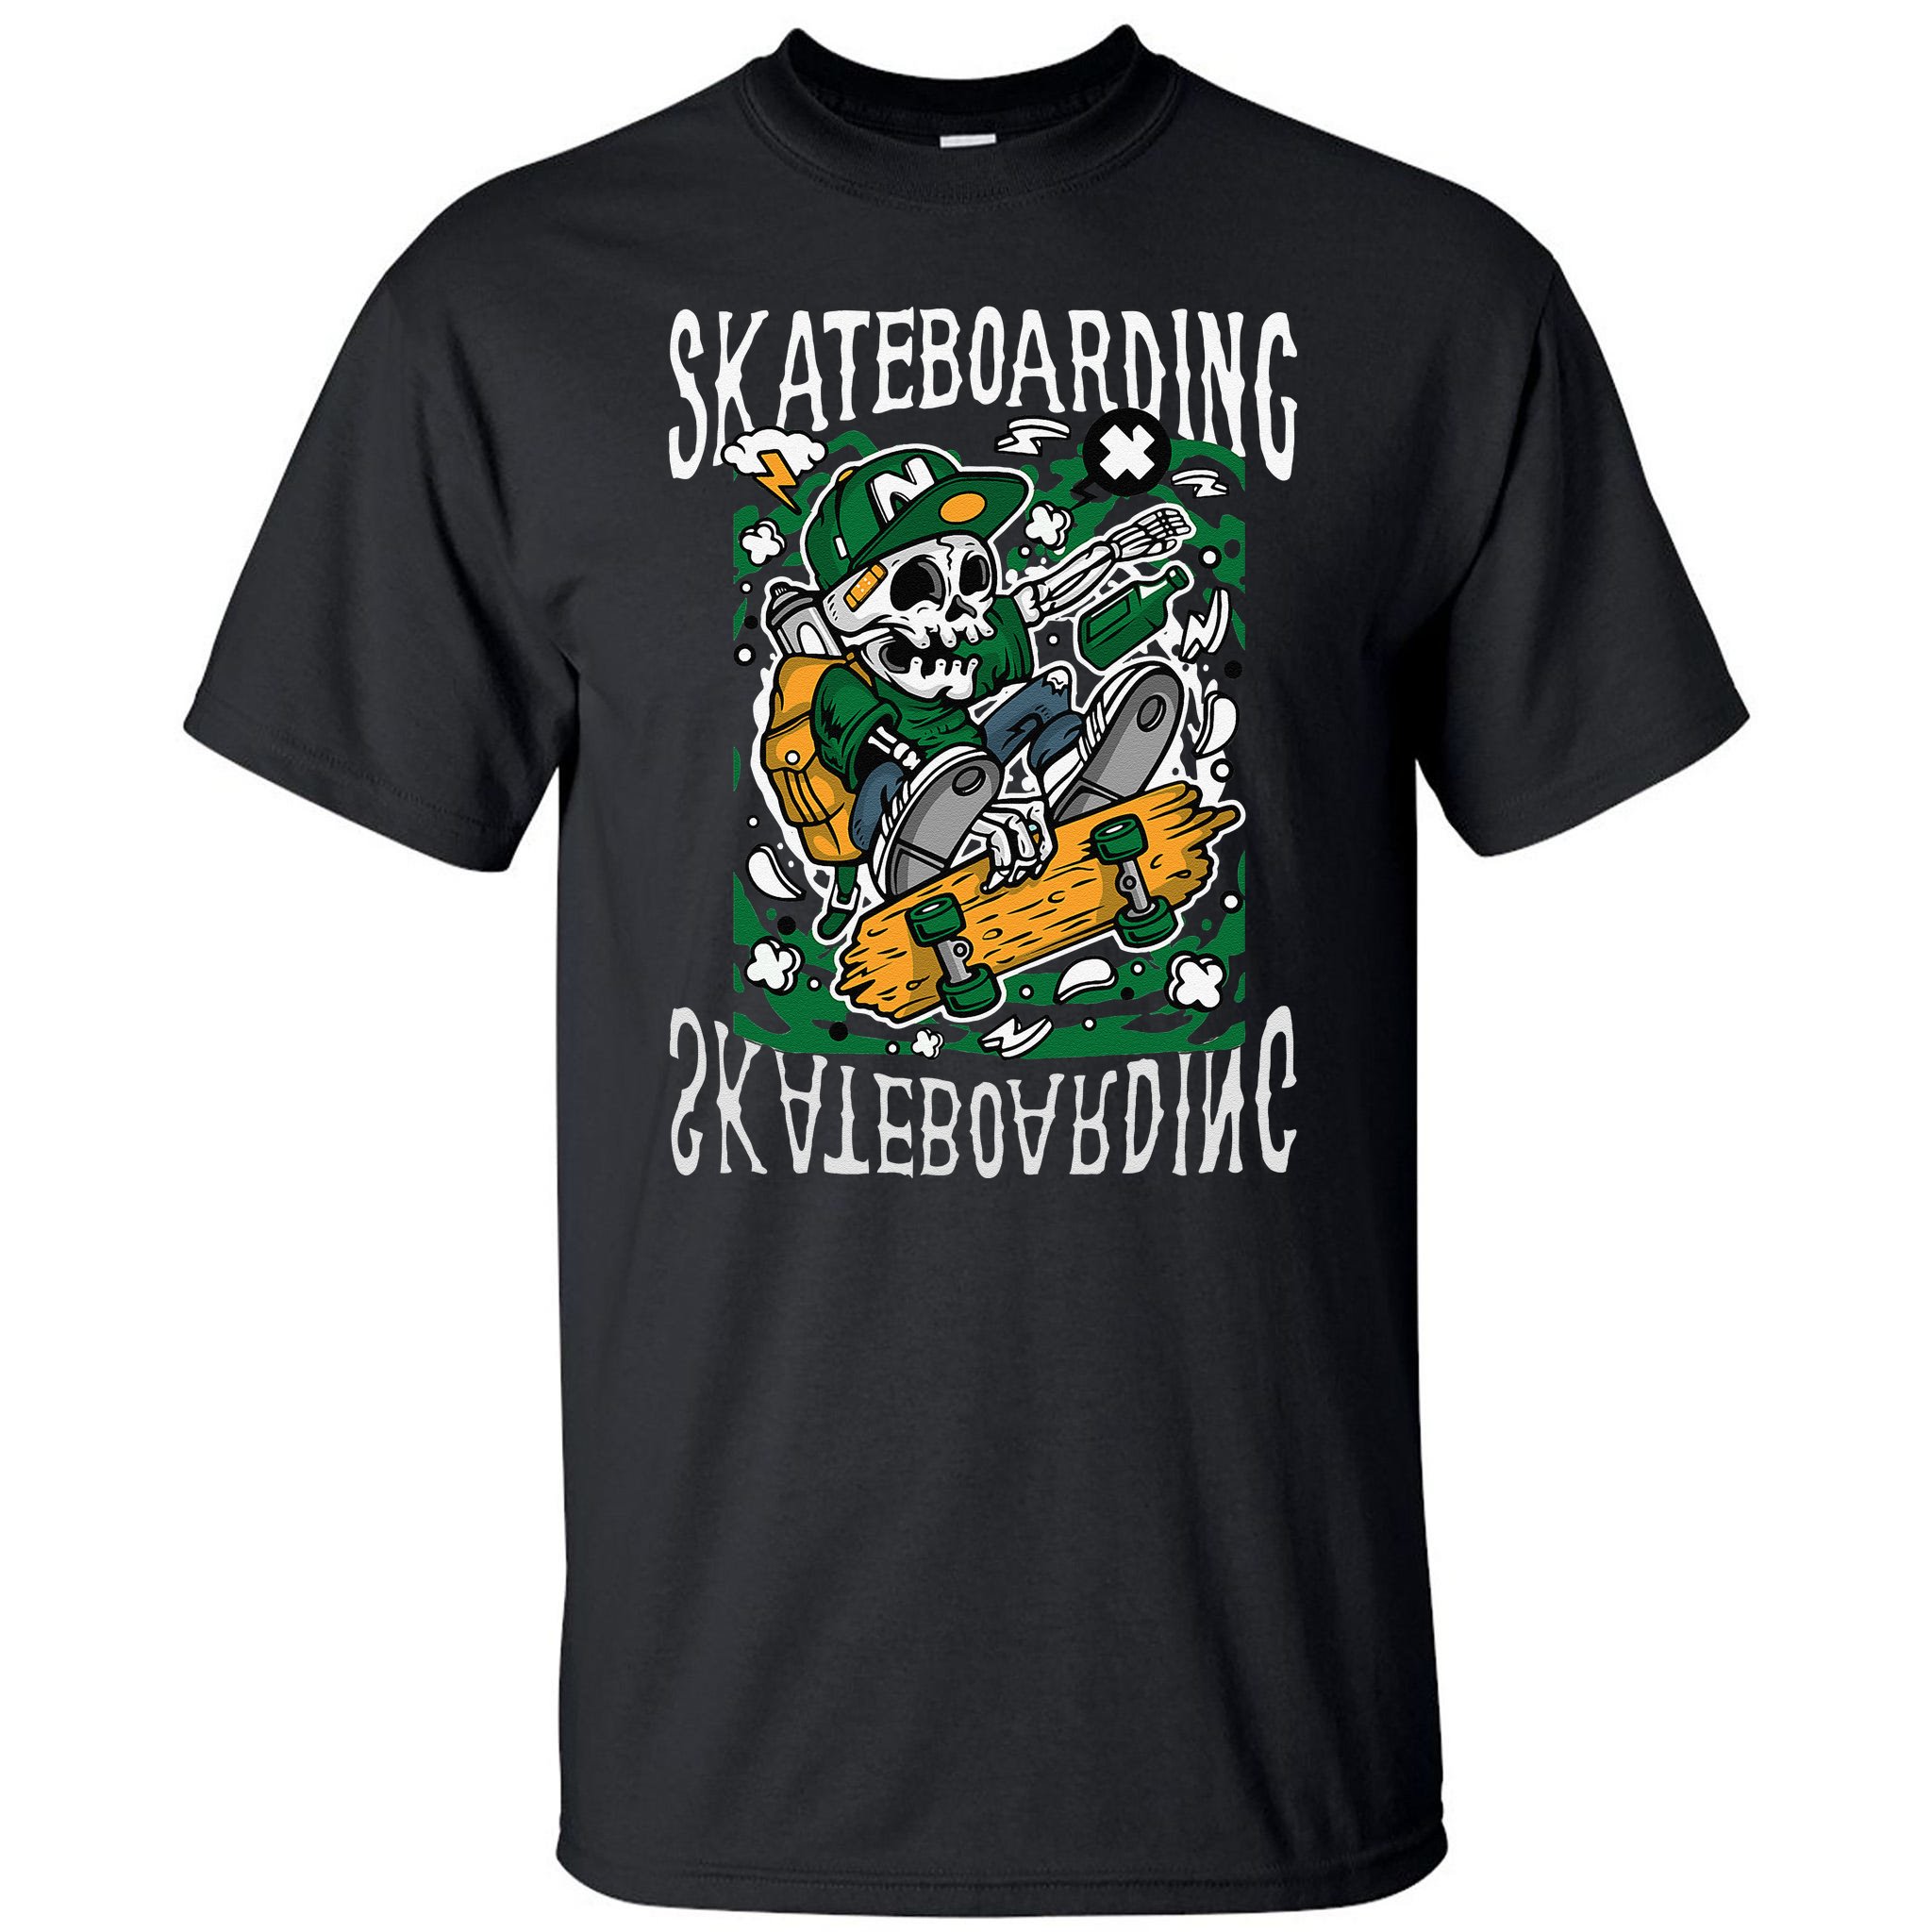 https://images3.teeshirtpalace.com/images/productImages/sss1781040-skateboarding-skull-skateboard-santa-cruz-street-wear--black-att-garment.jpg